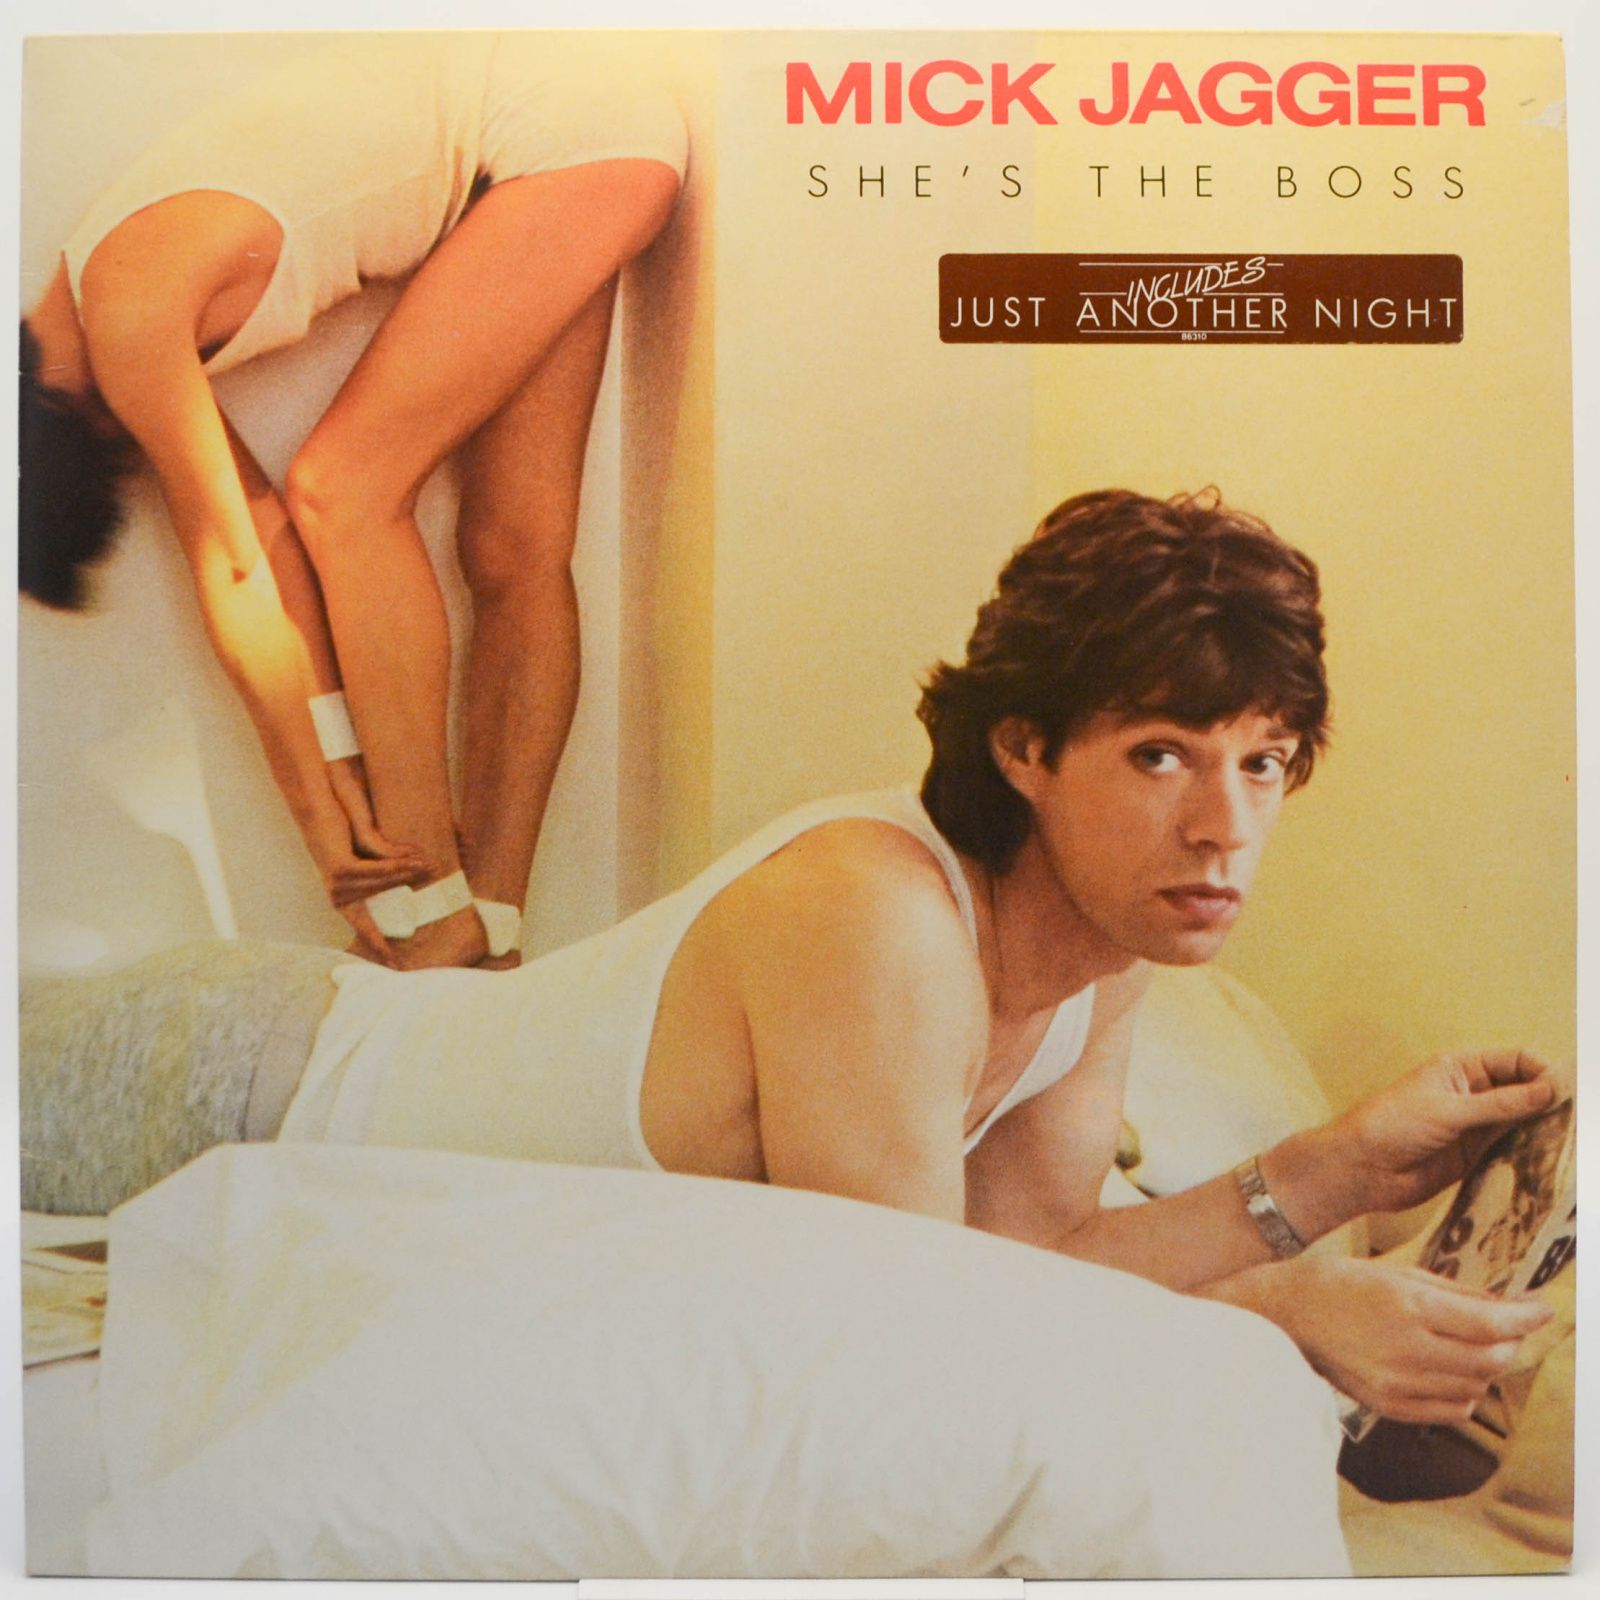 Mick Jagger — She's The Boss, 1985